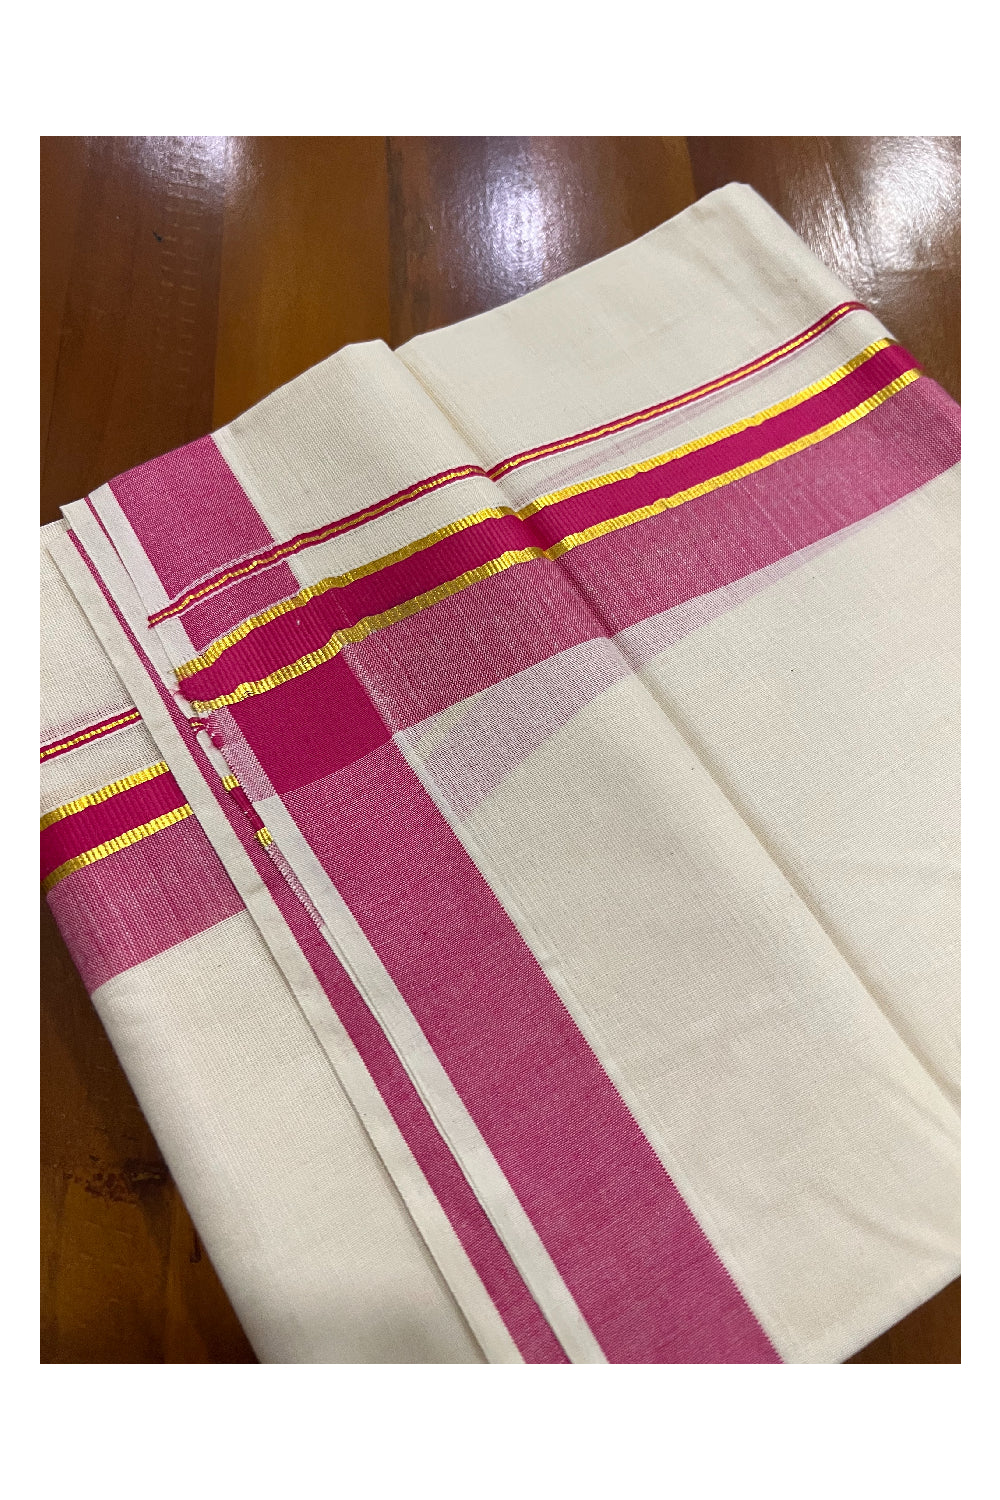 Off White Pure Cotton Double Mundu with Kasavu and Dark Pink Kara (South Indian Dhoti)